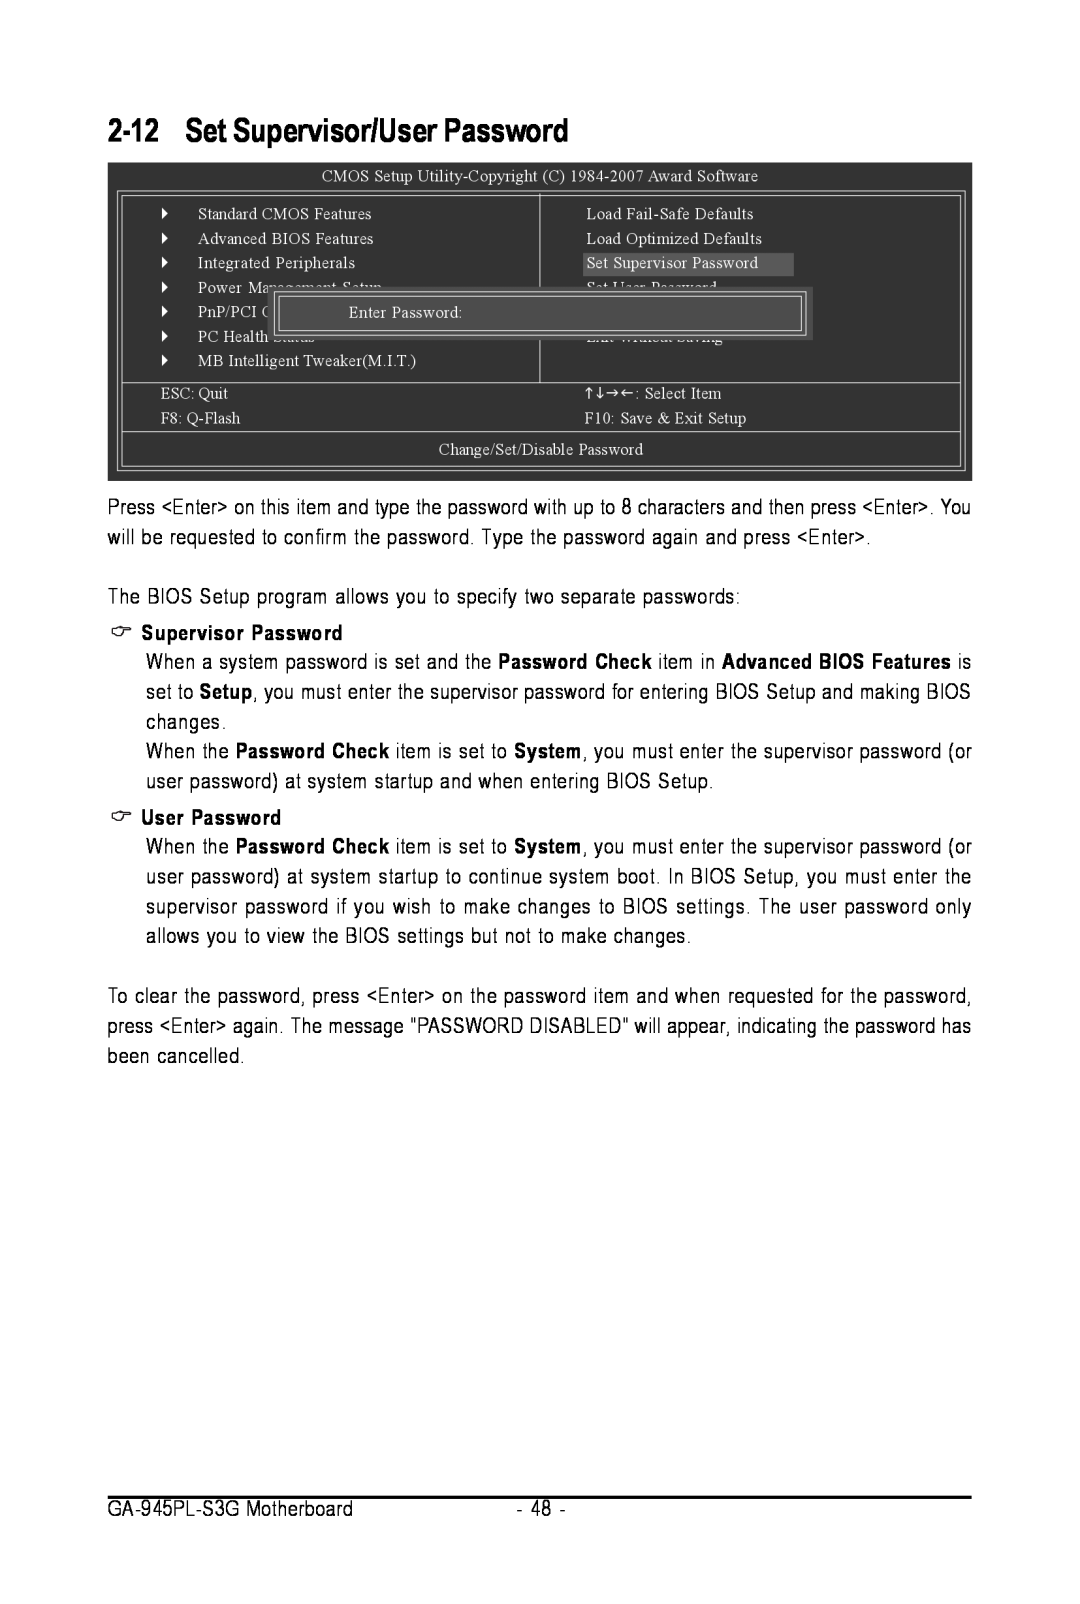 Intel GA-945PL-S3G user manual 2-12, Set Supervisor/User Password, Supervisor Password 